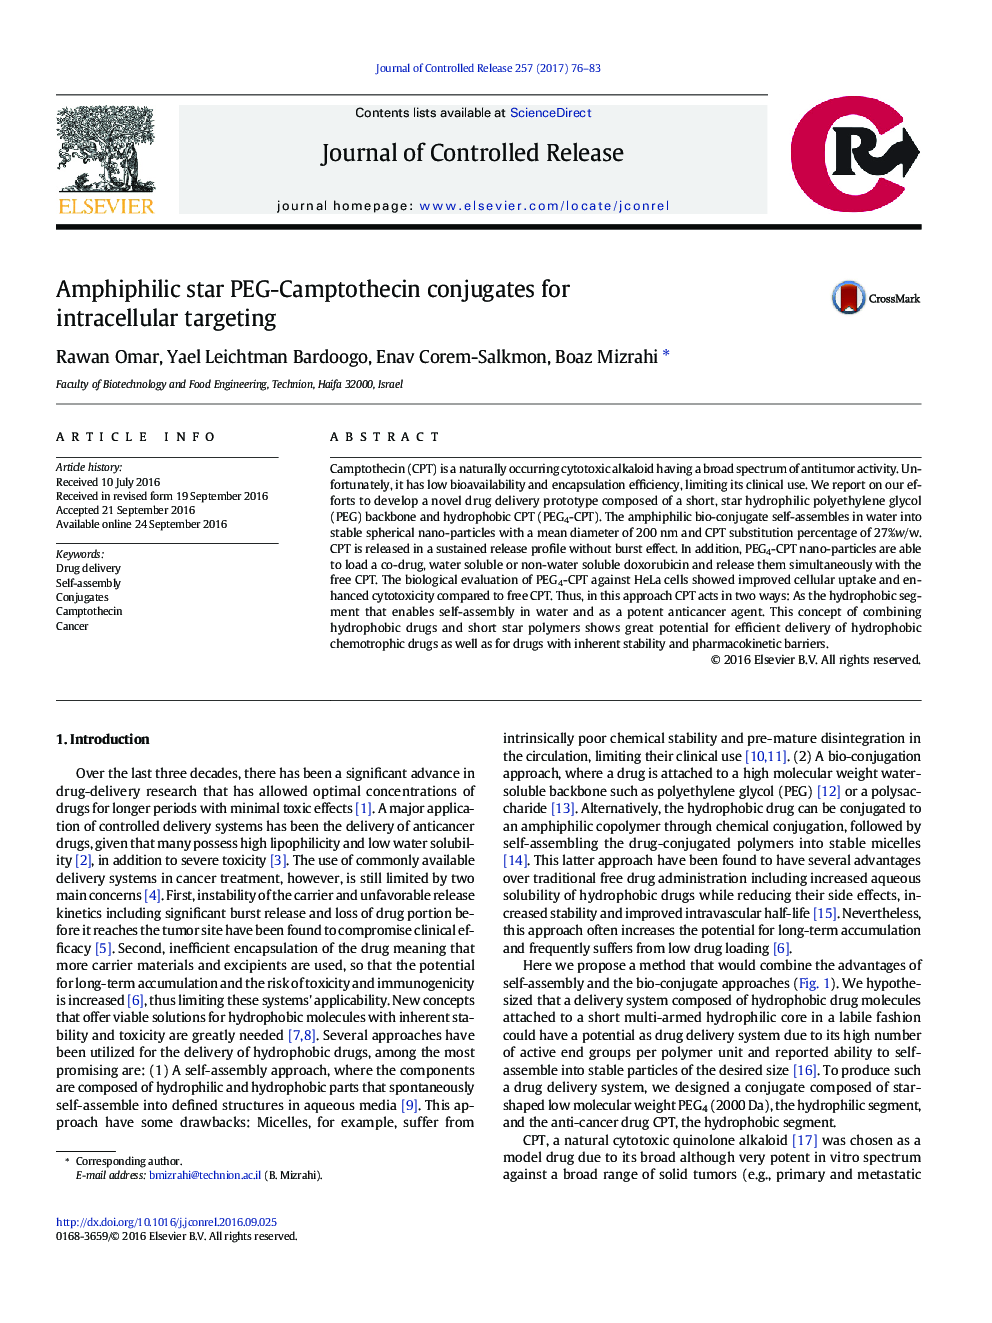 Amphiphilic star PEG-Camptothecin conjugates for intracellular targeting